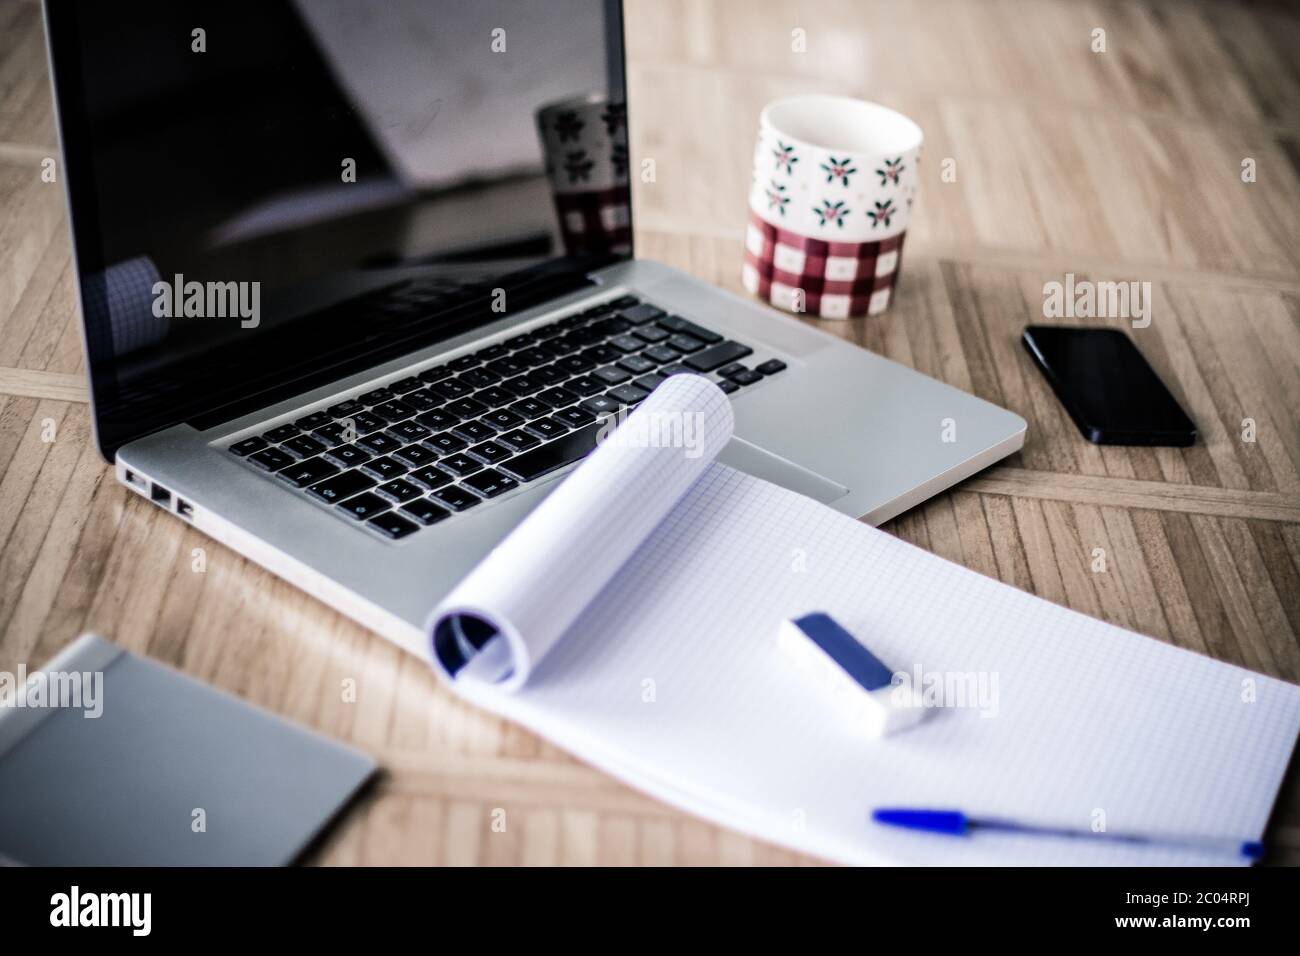 Working Desktop Concept for Smart Working Stock Photo